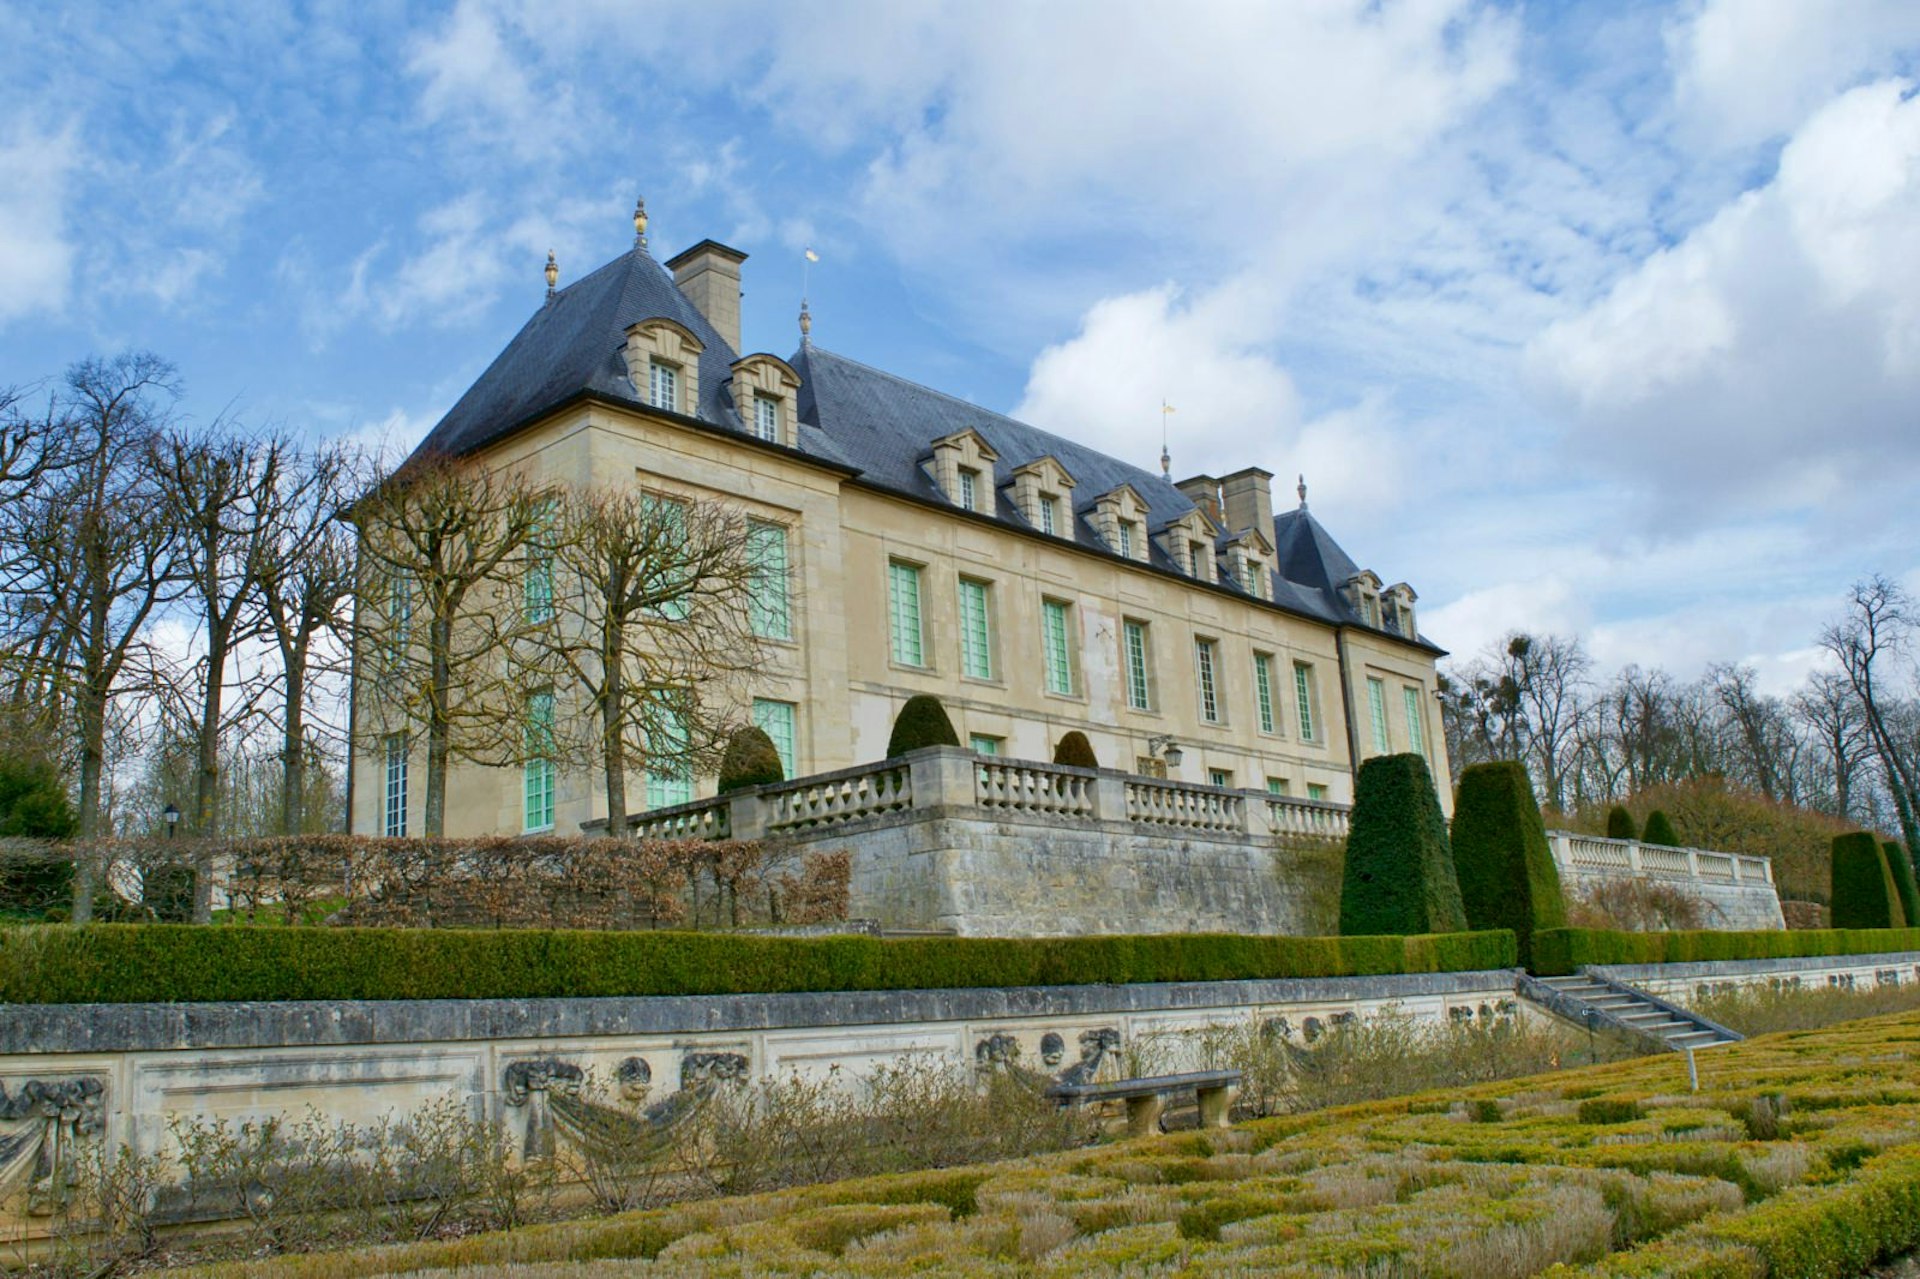 The 17th-century Château d’Auvers-sur-Oise and its landscaped gardens at Auvers-sur-Oise, France © Janine Eberle / Lonely Planet